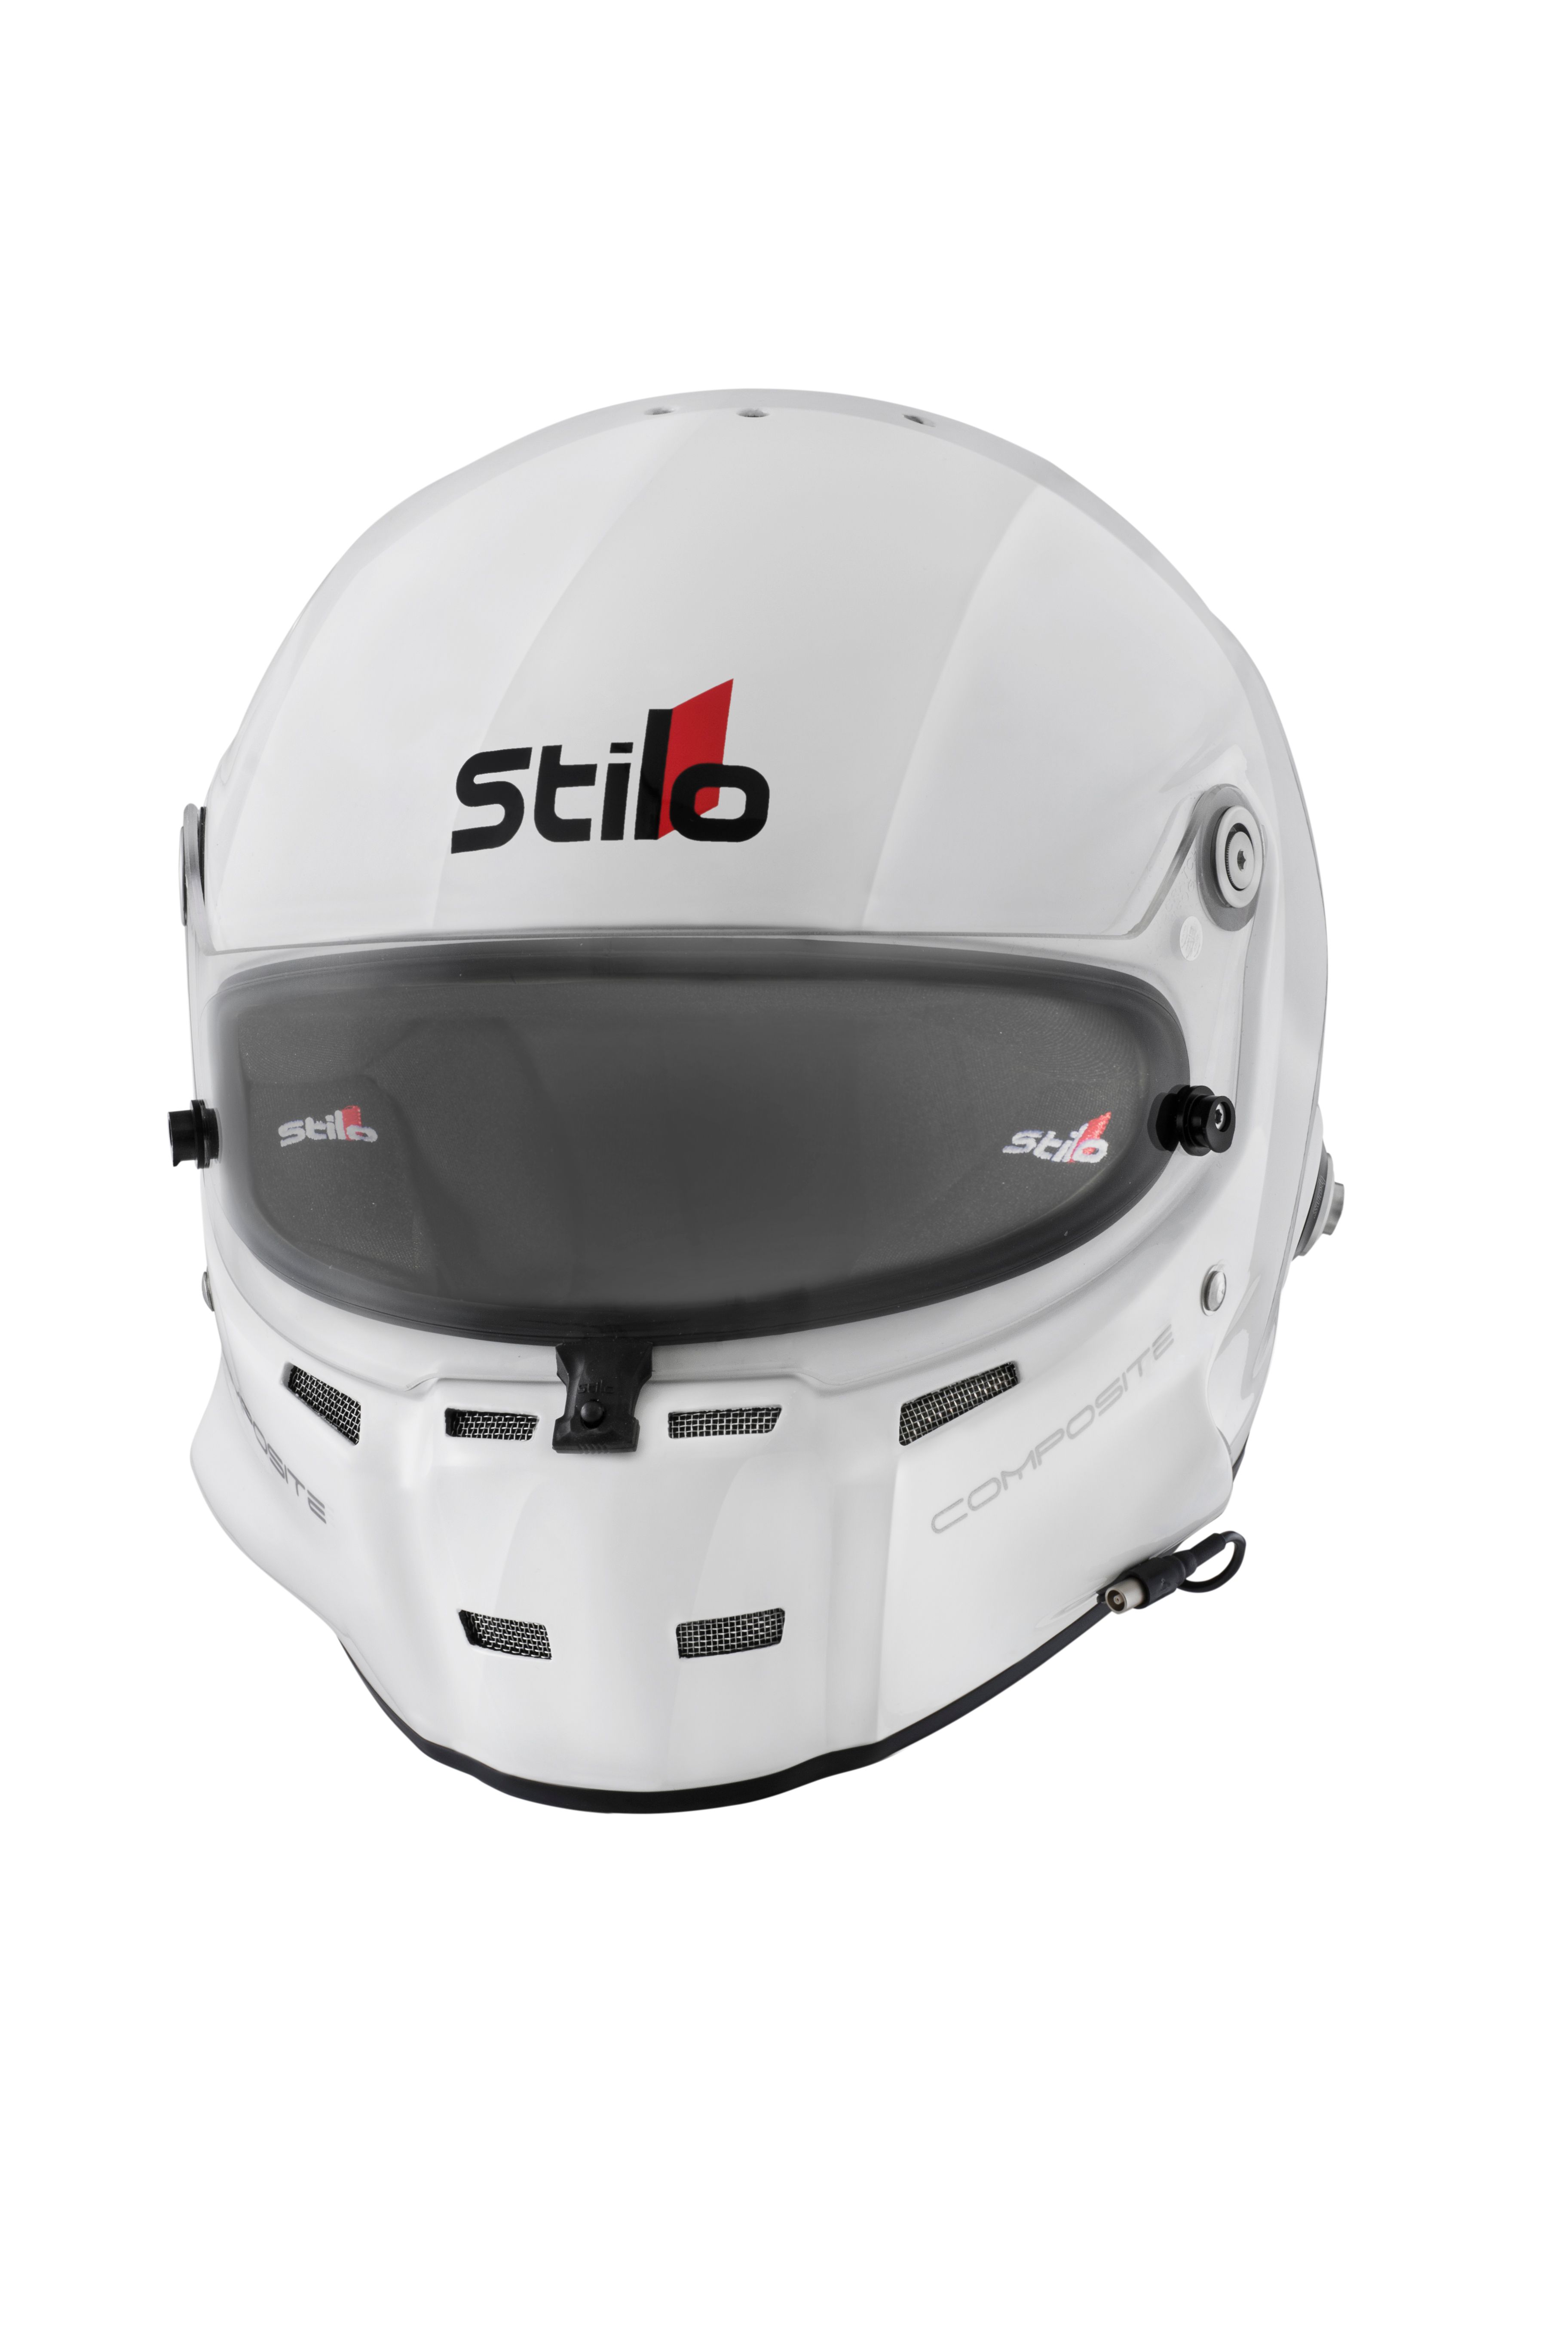 Шлем закрытый STILO ST5F Composite интерком, HANS, (FIA8859-2015 и SHELL 2020)